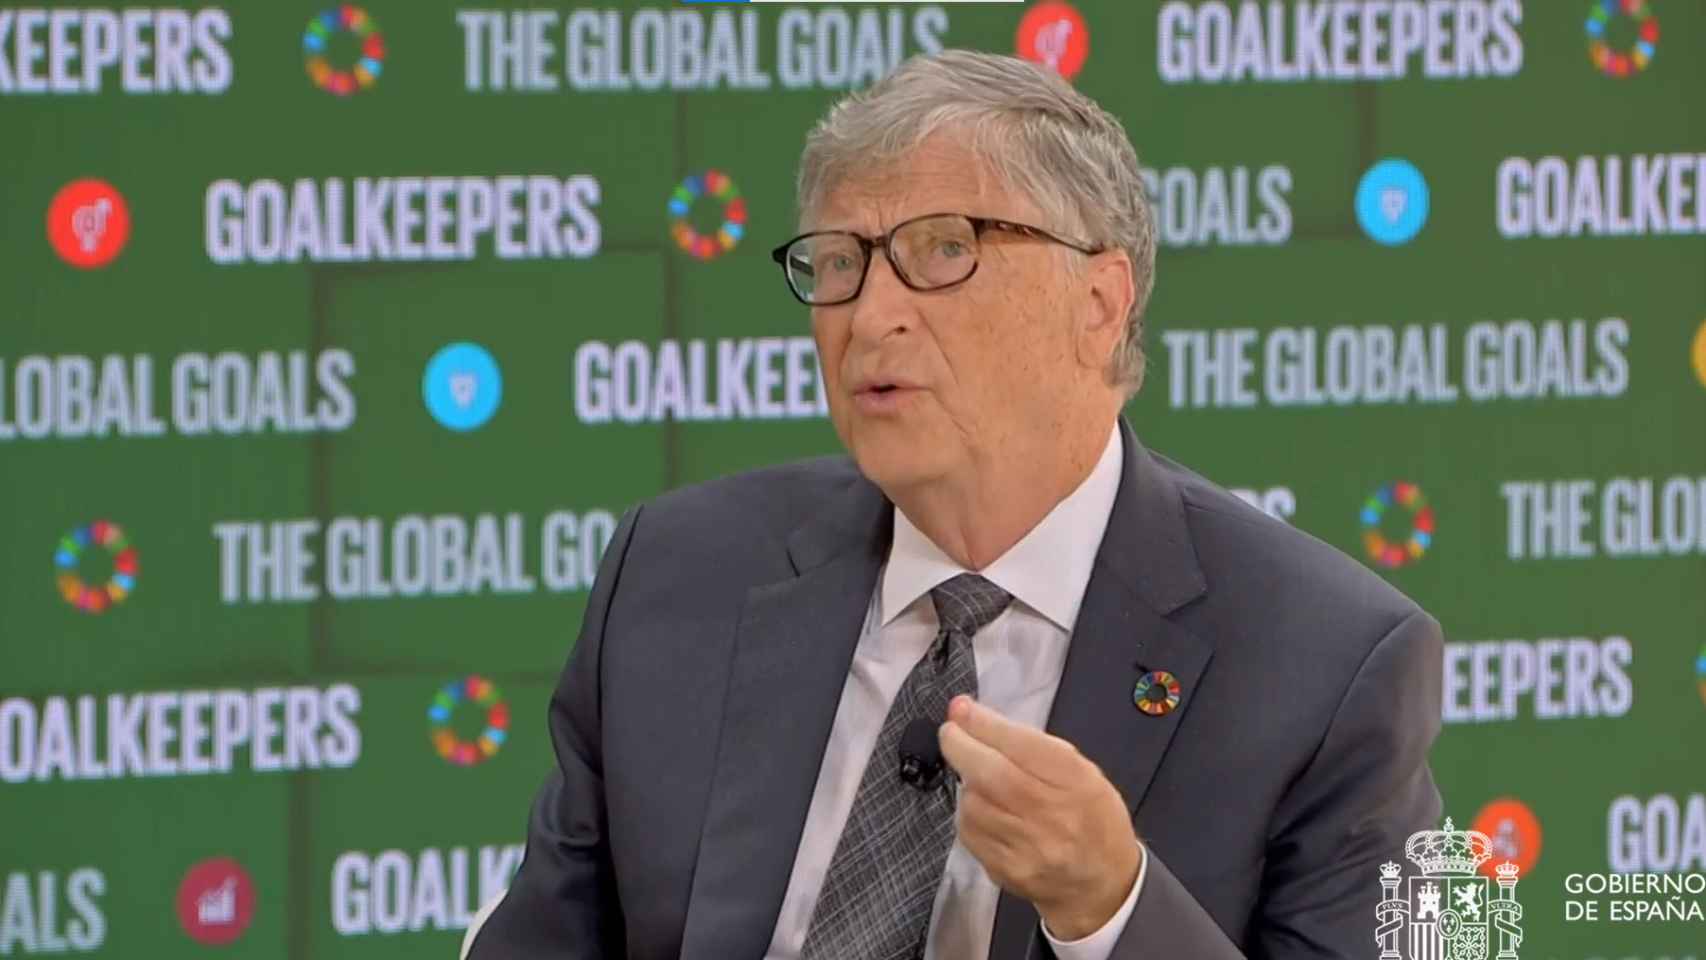 Bill Gates, Microsoft Founder and Event Organizer 